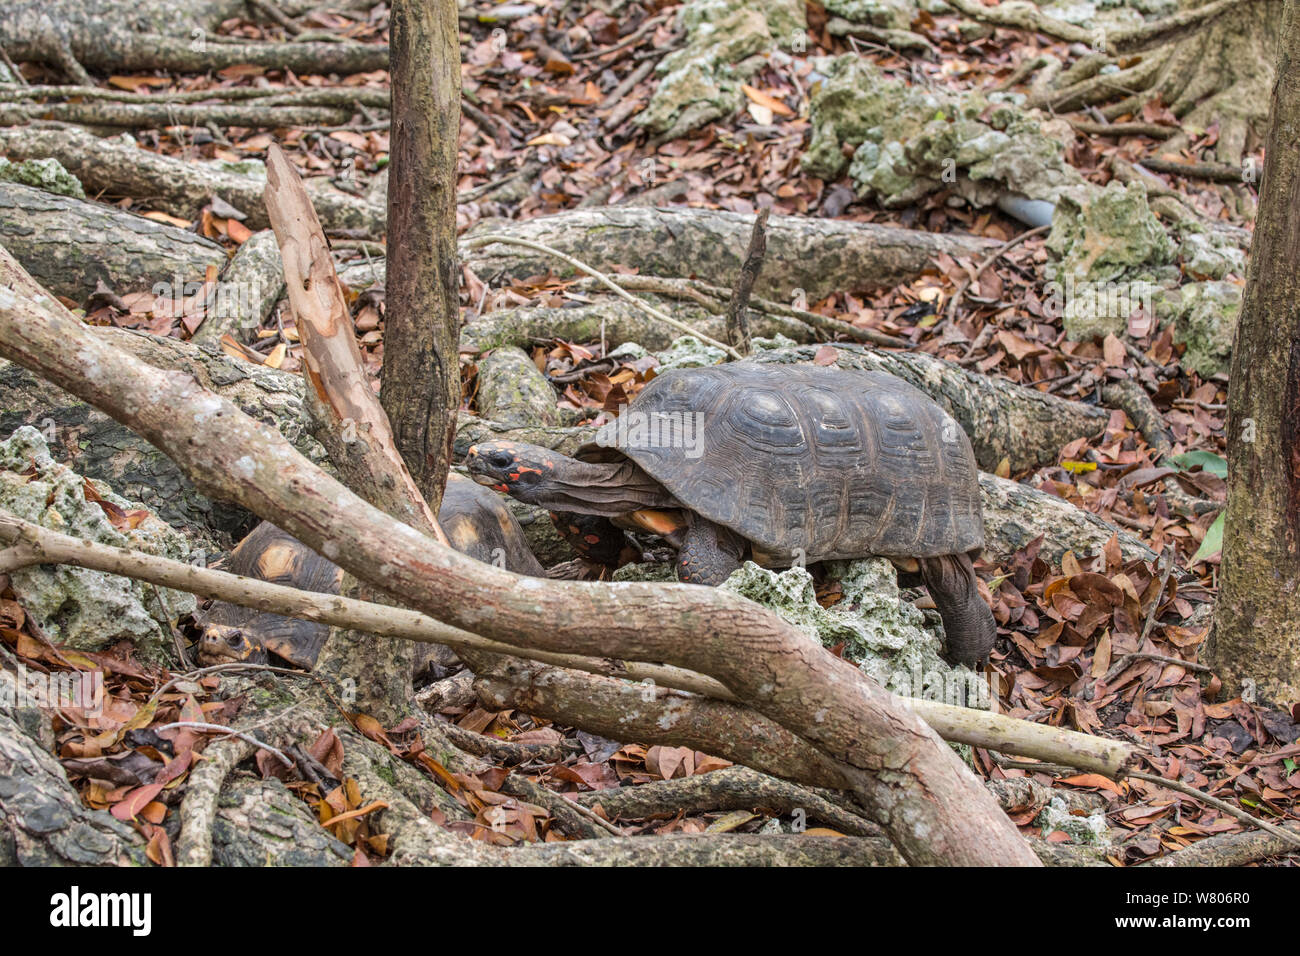 Red-footed tortoise (Chelonoidis carbonaria) Barbados. Stock Photo